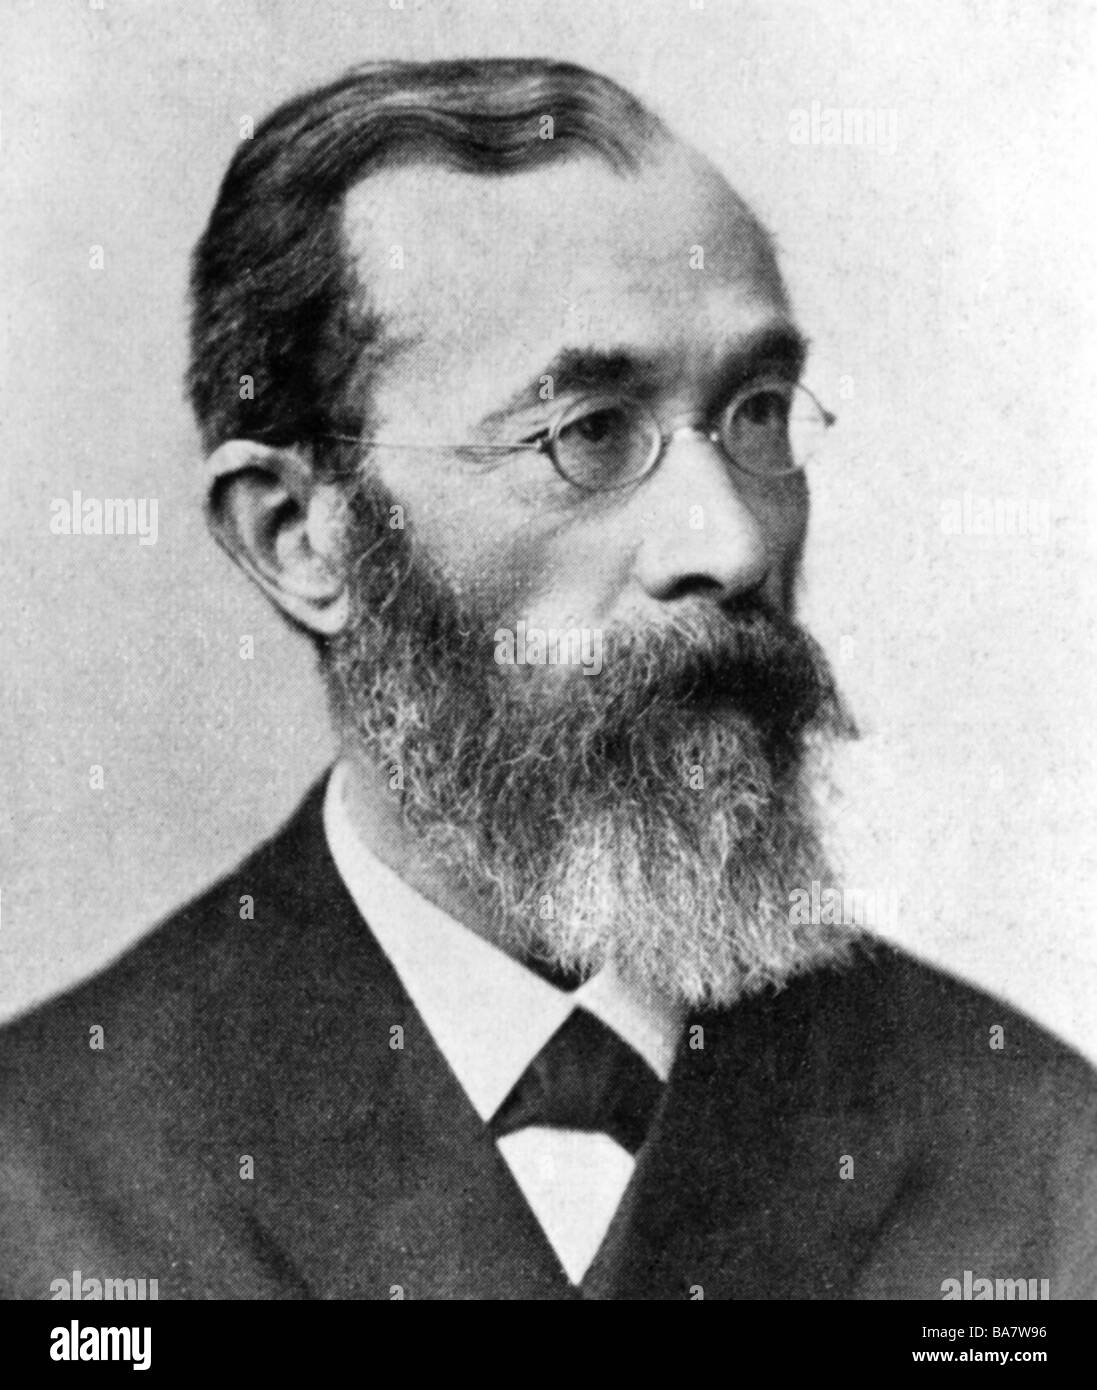 Wundt, Wilhelm, 16.8.1832 - 31.8.1920, German philosopher and psychologist, portrait, circa 1910, Stock Photo